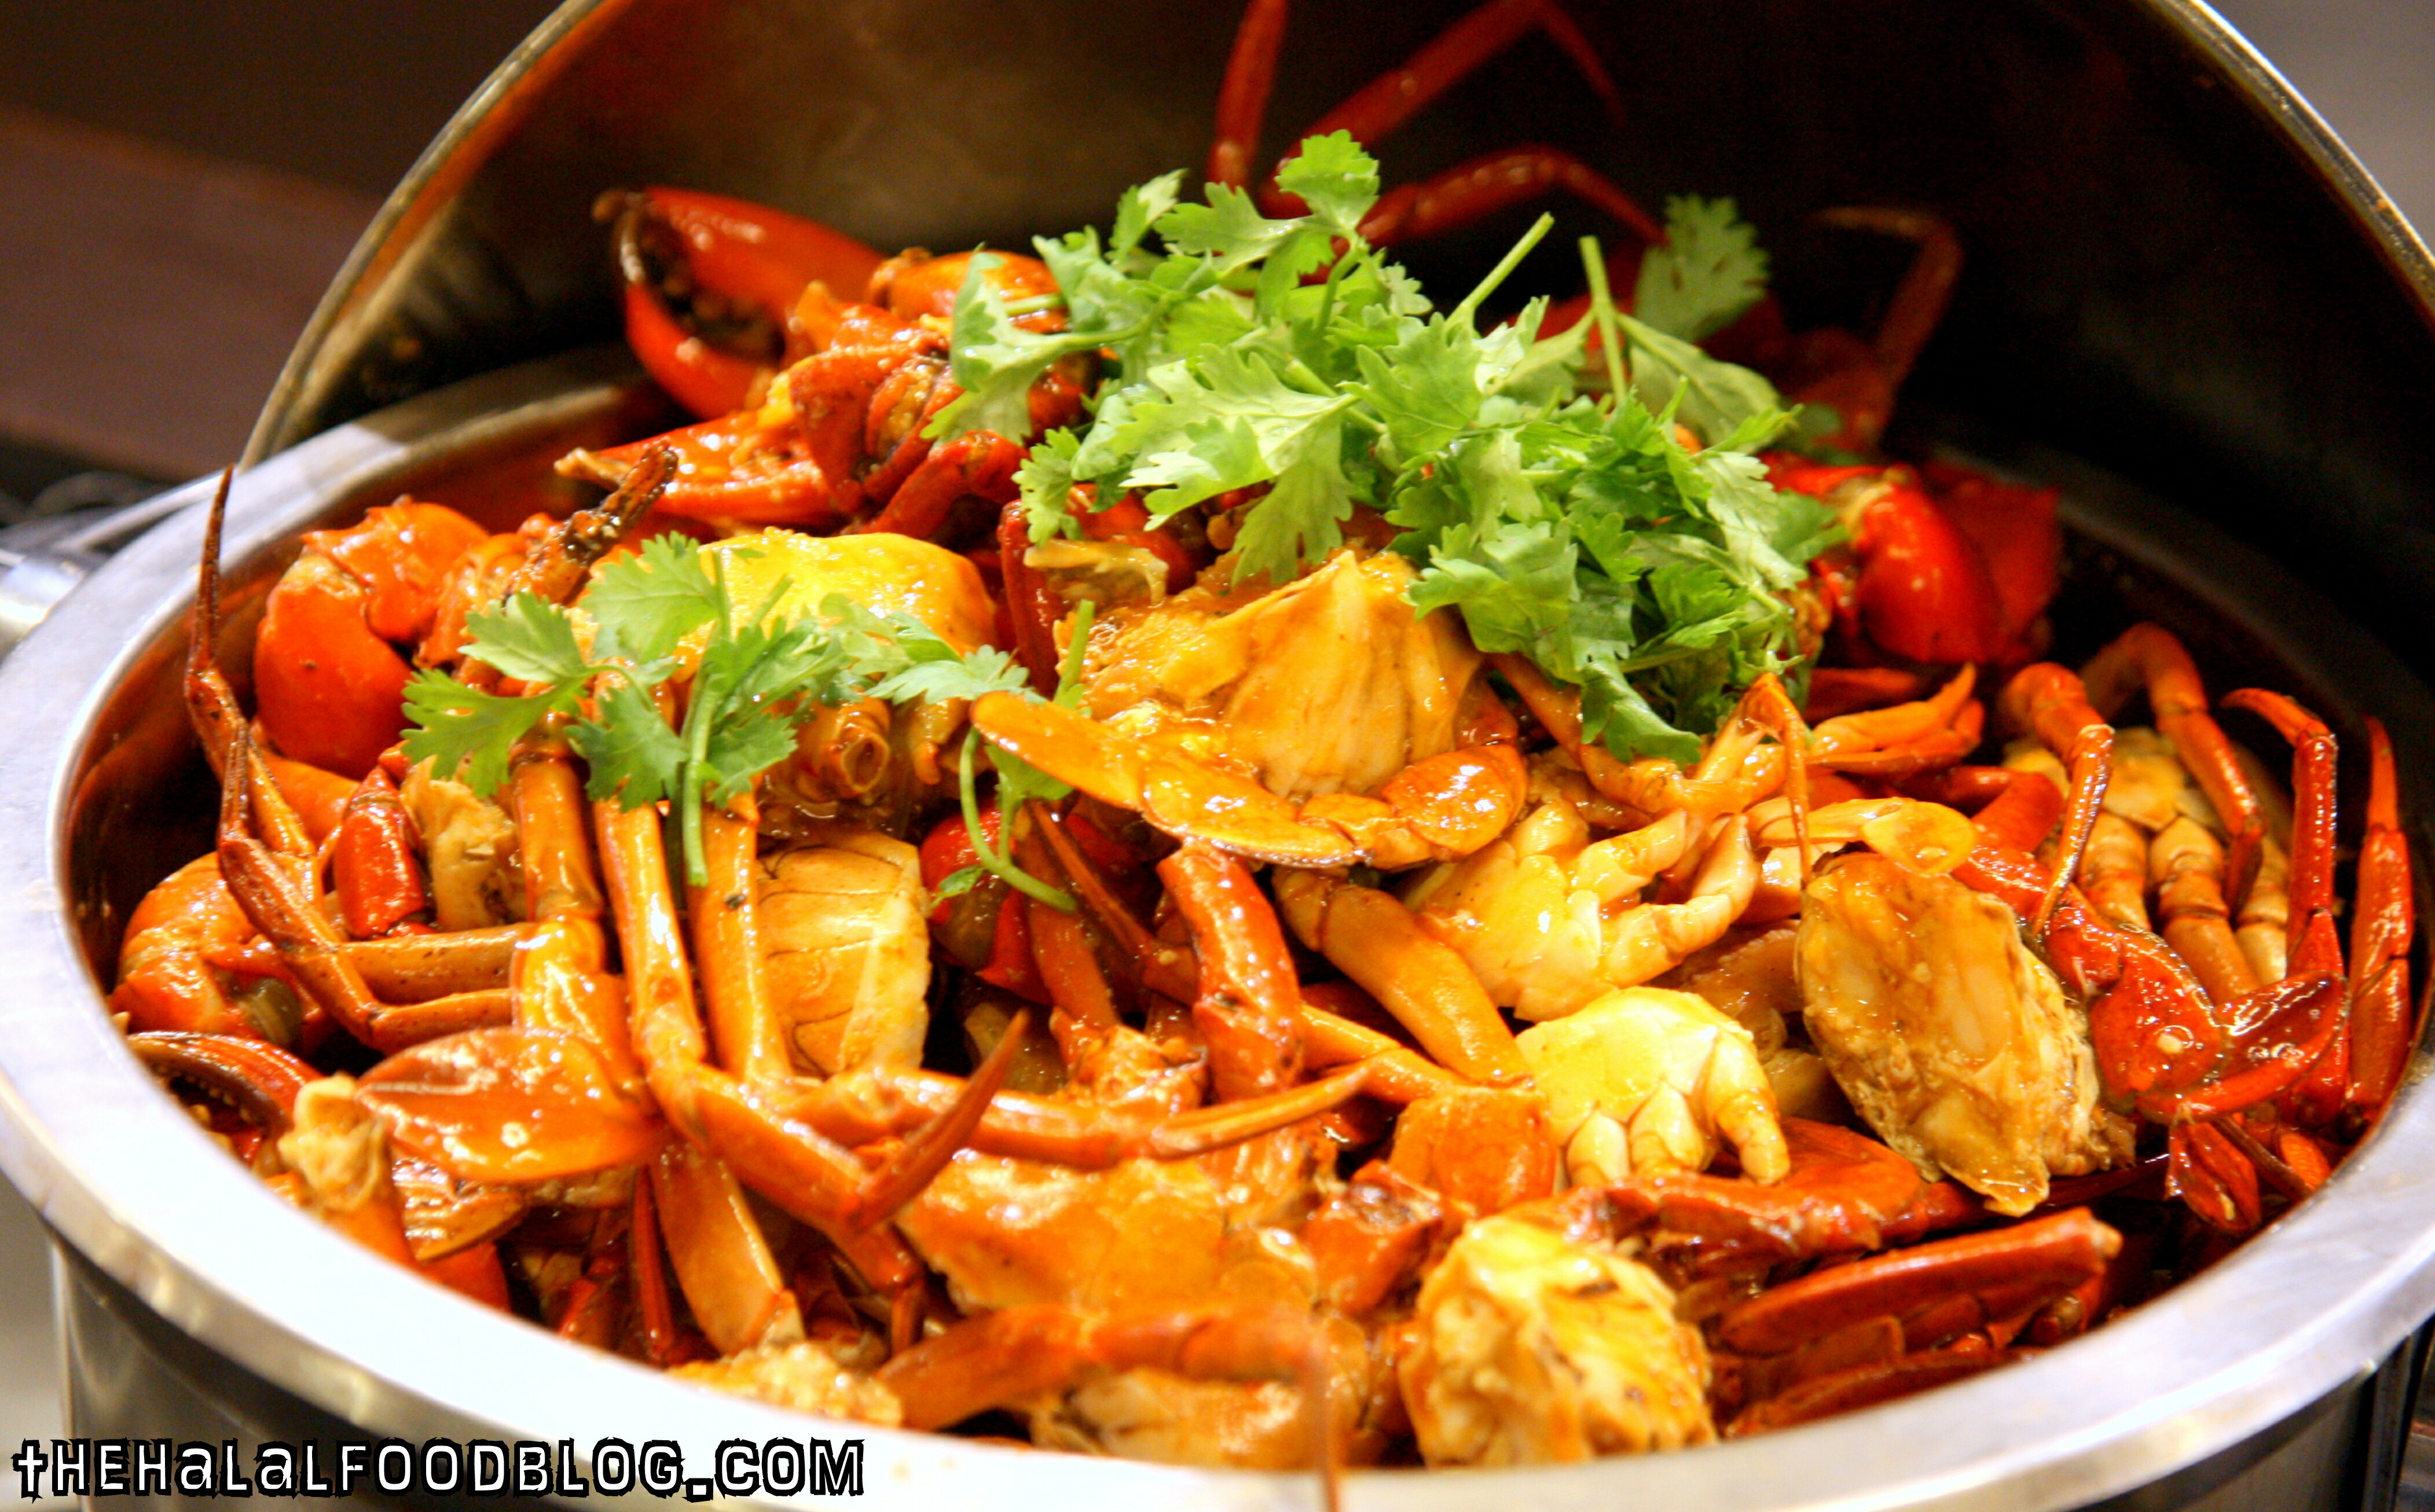 Penang St Buffet - East vs West Crab Buffet - The Halal Food Blog